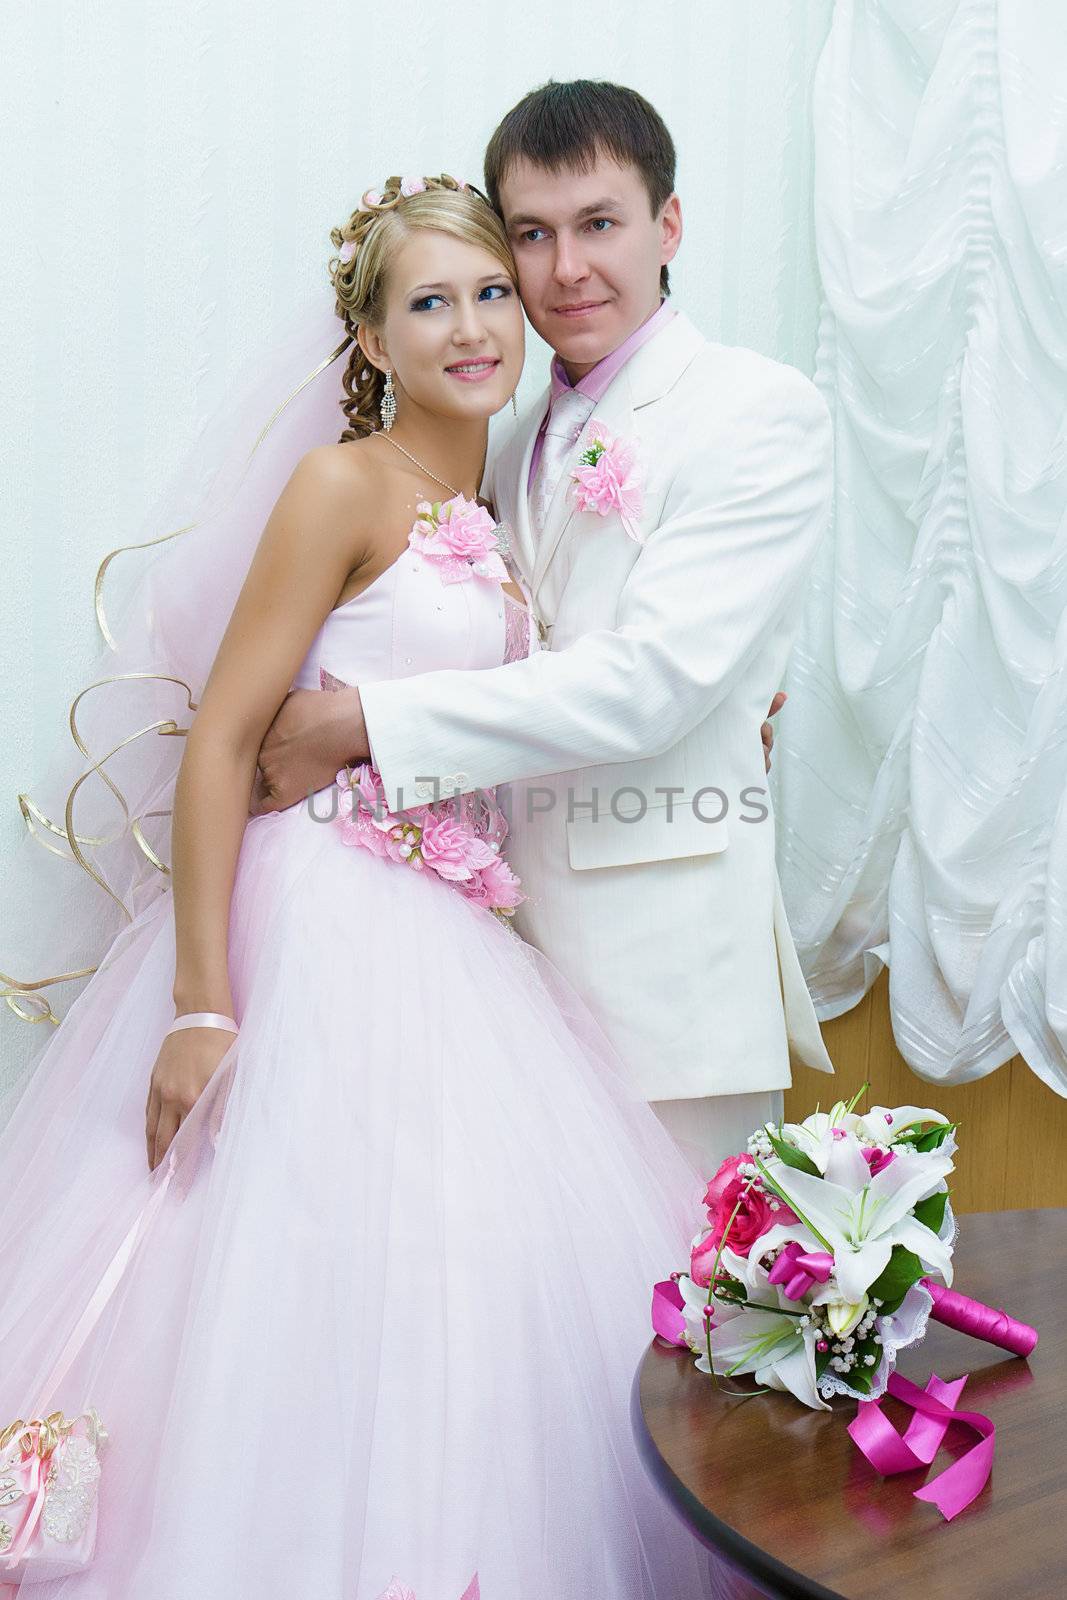 Bride and groom in wedding attire by pzRomashka